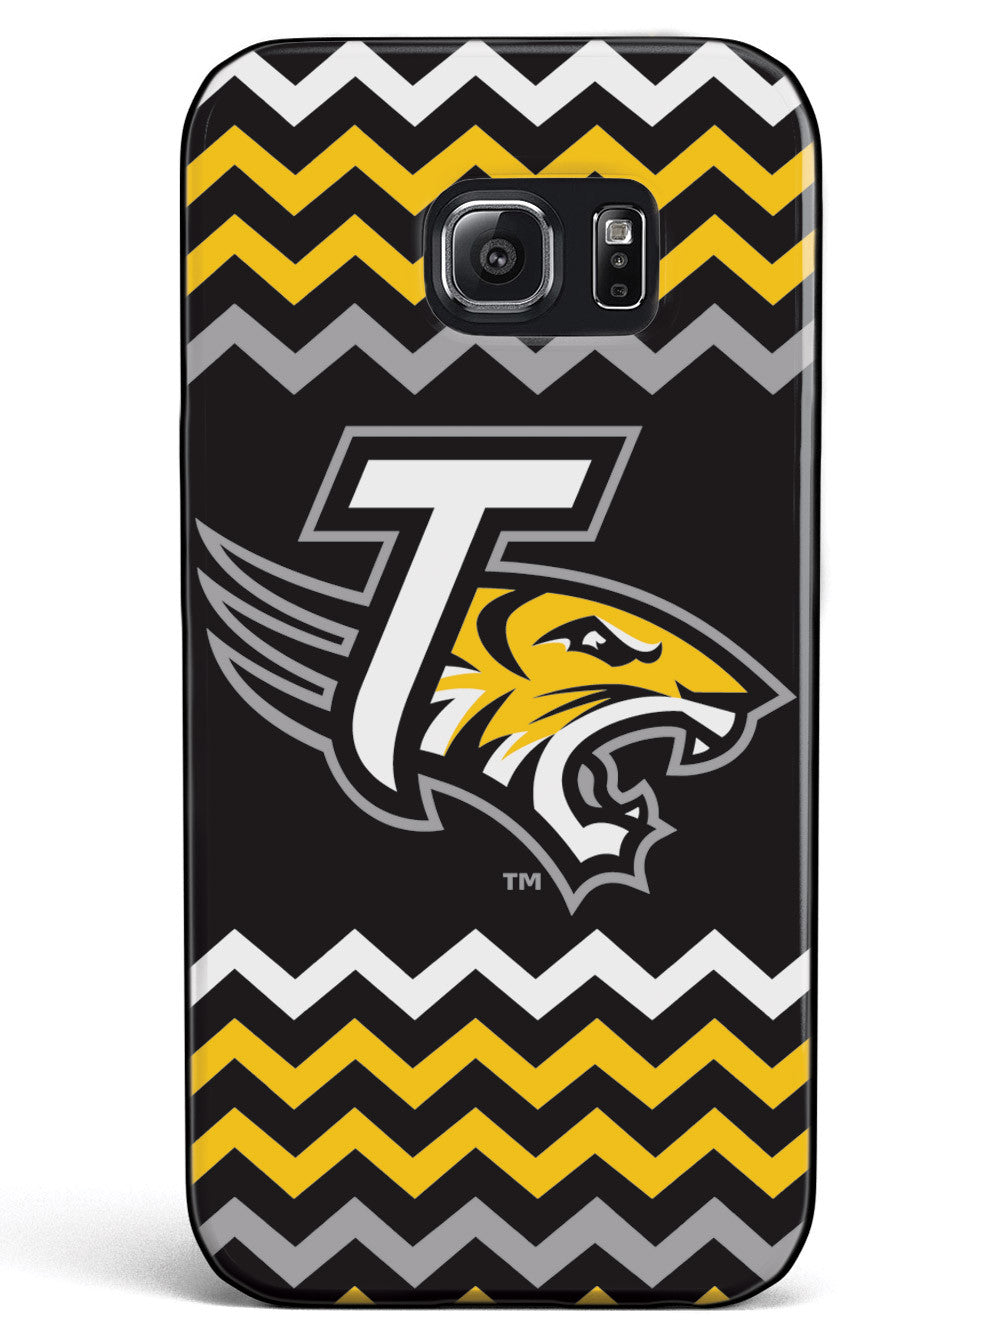 Towson University Tigers - Chevron Case